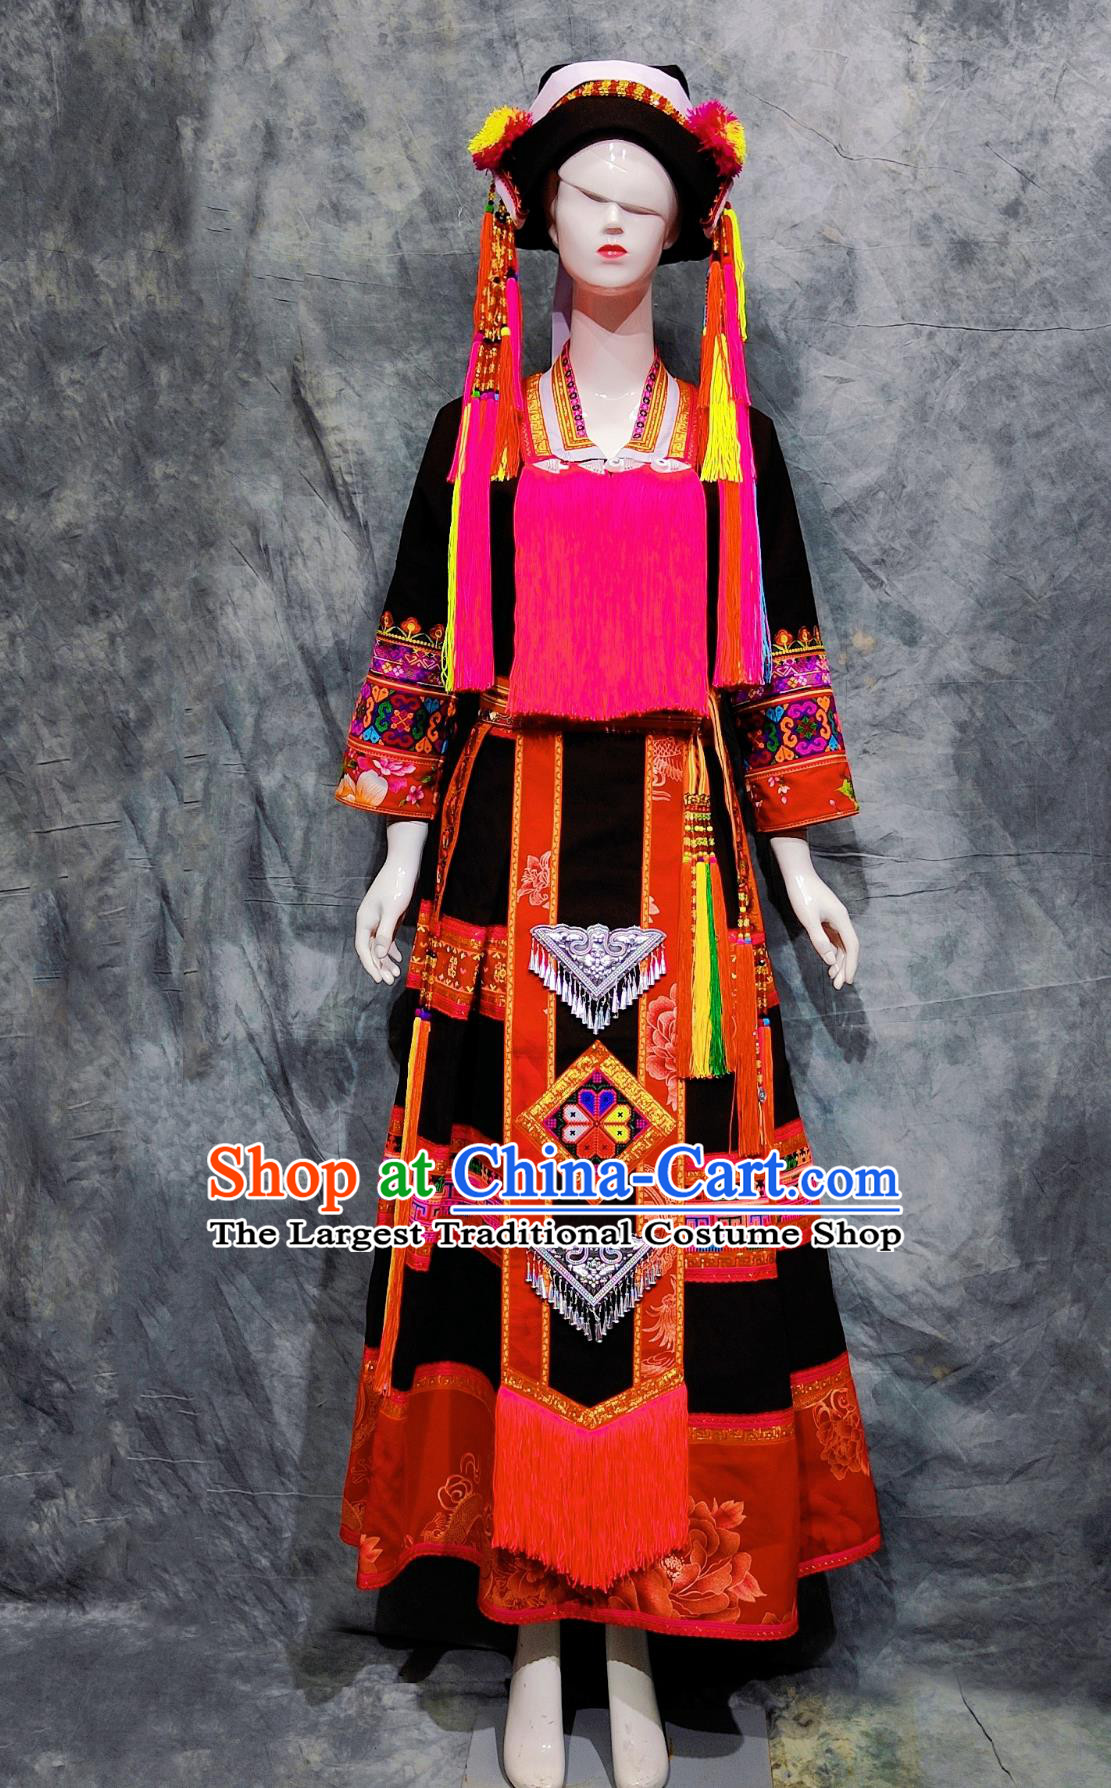 Chinese Ethnic Dance Costume China Yao National Minority Woman Clothing Traditional Guangxi March 3rd Festival Dress